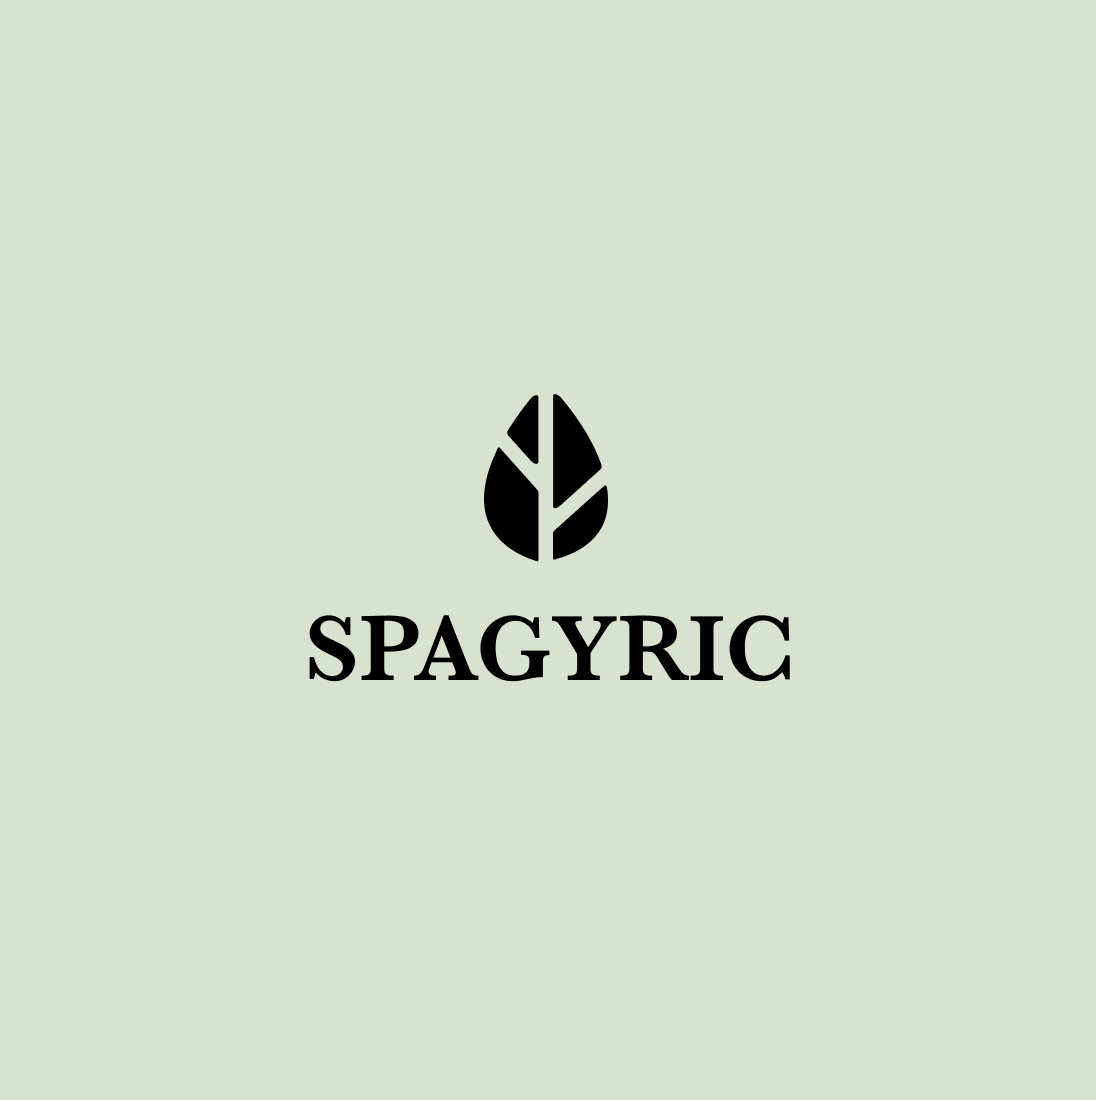 Spagyric